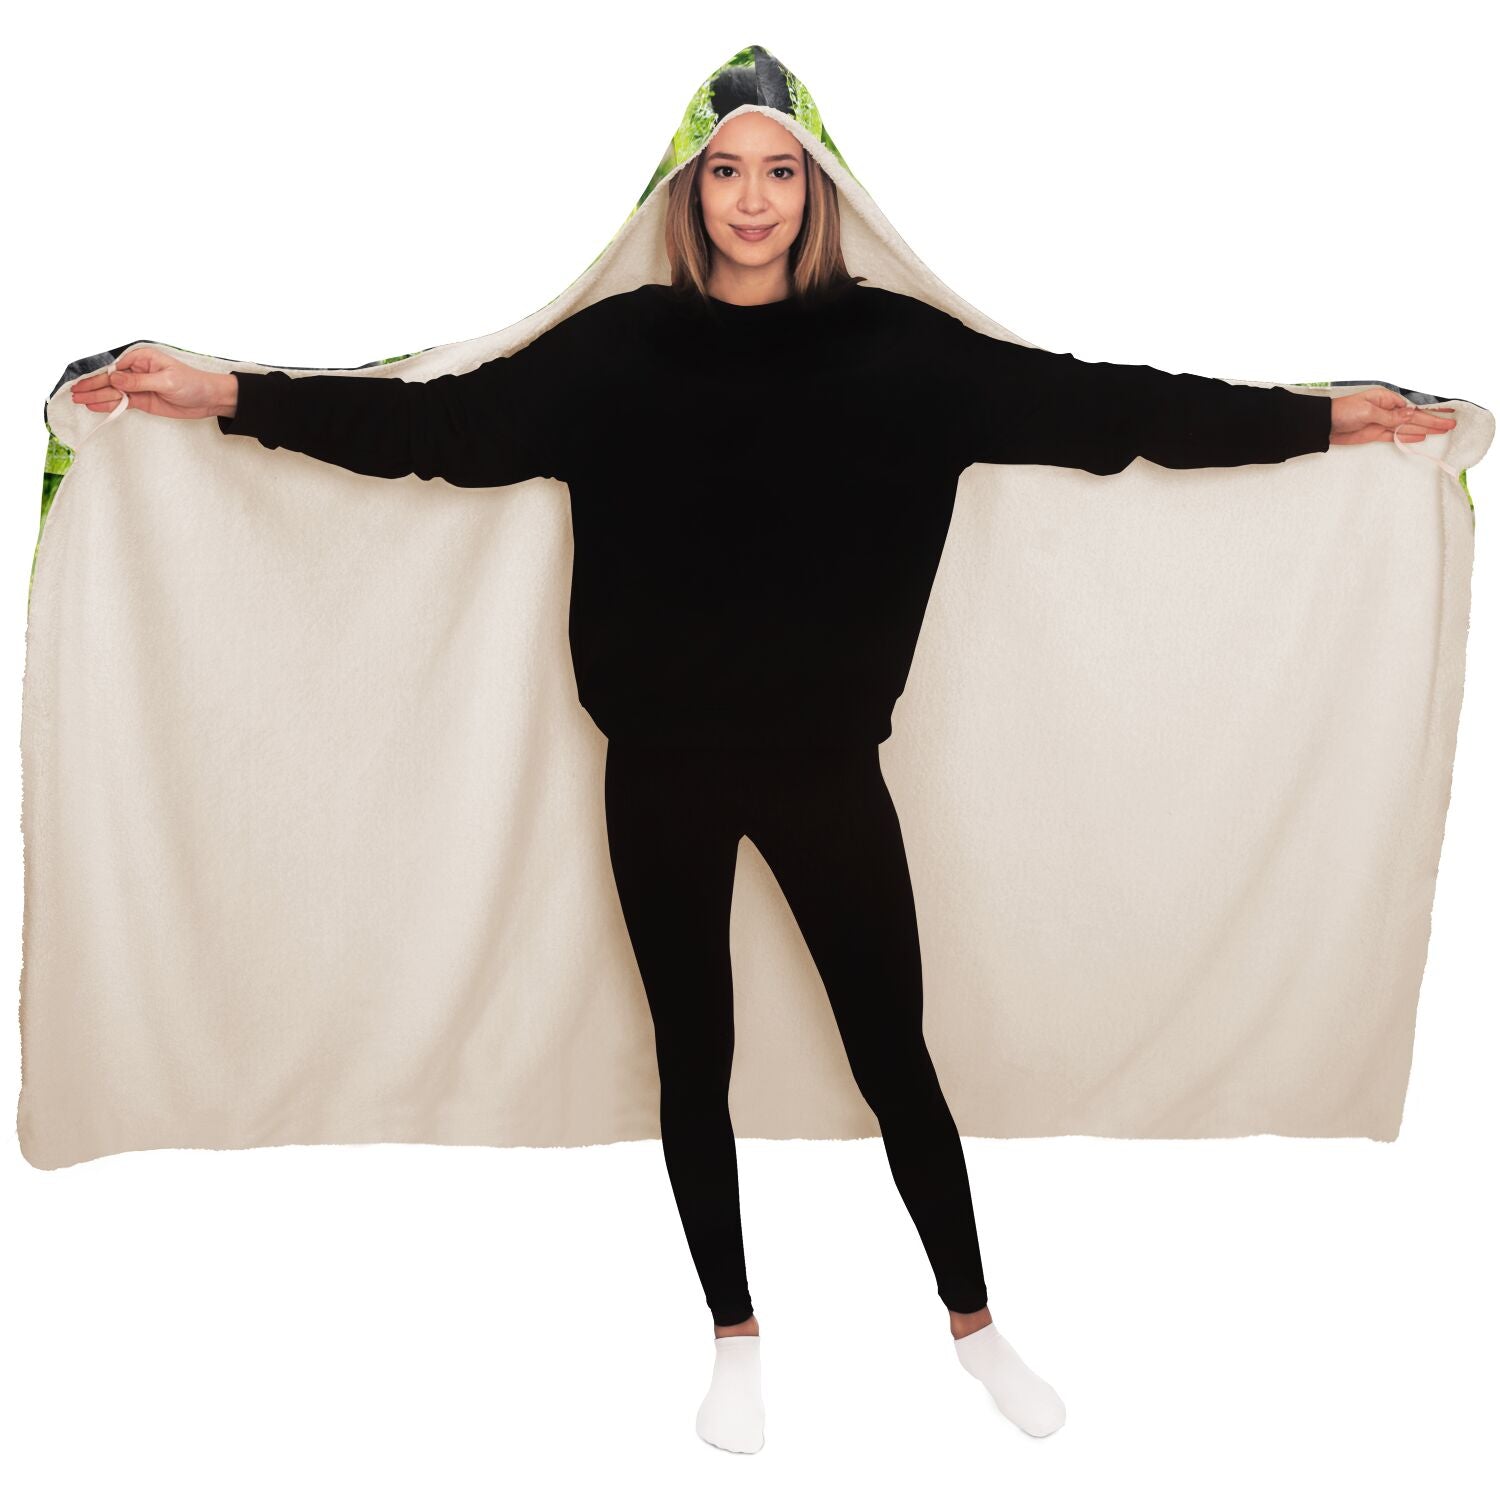 Iconic Gorilla Hooded Blanket - AOP - Primation